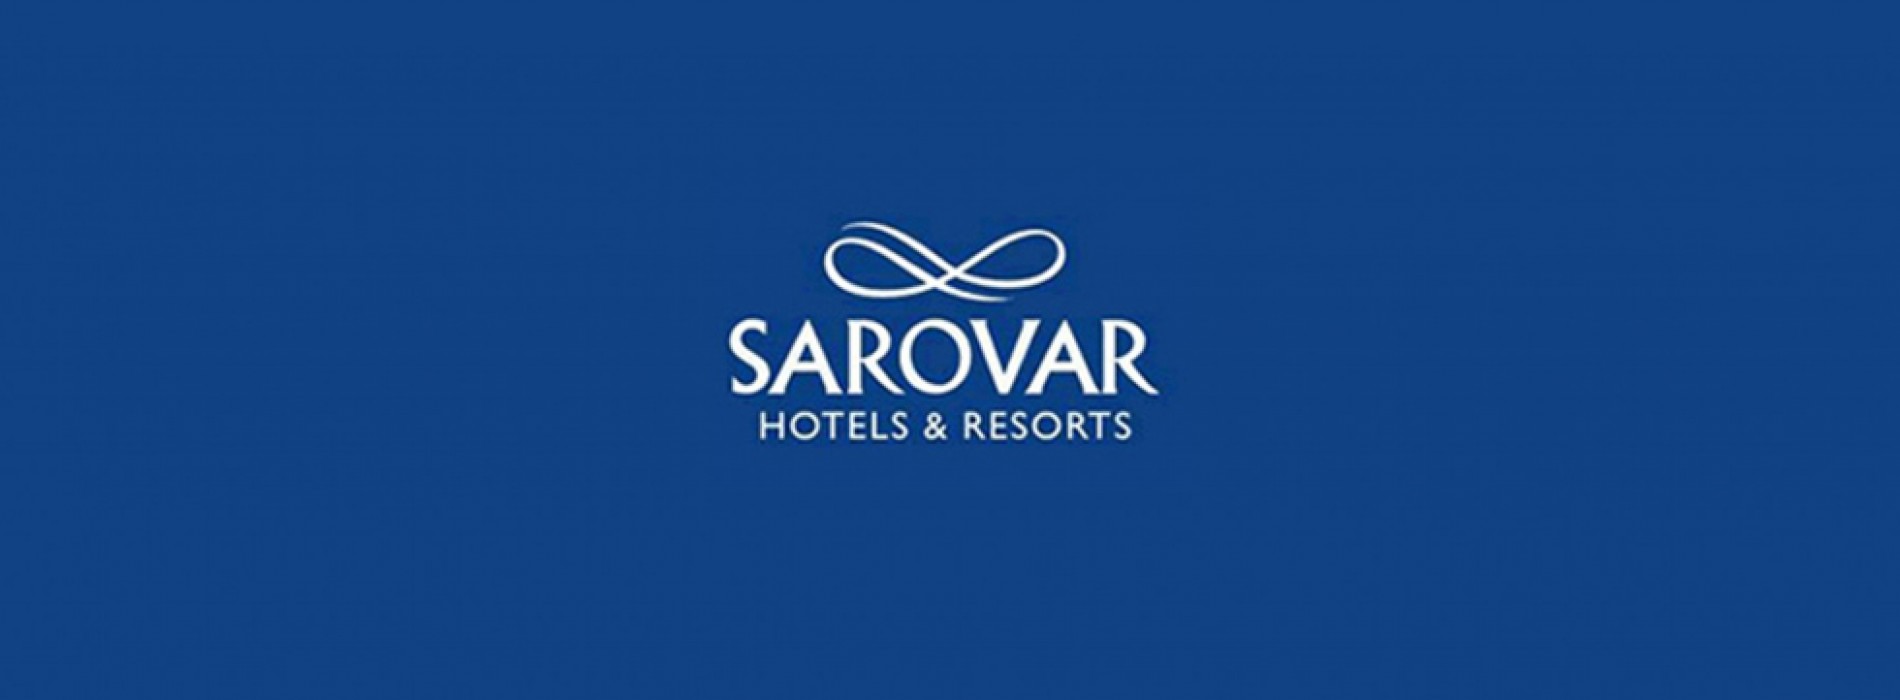 Sarovar Hotels & Resorts signs a new hotel in Jhansi